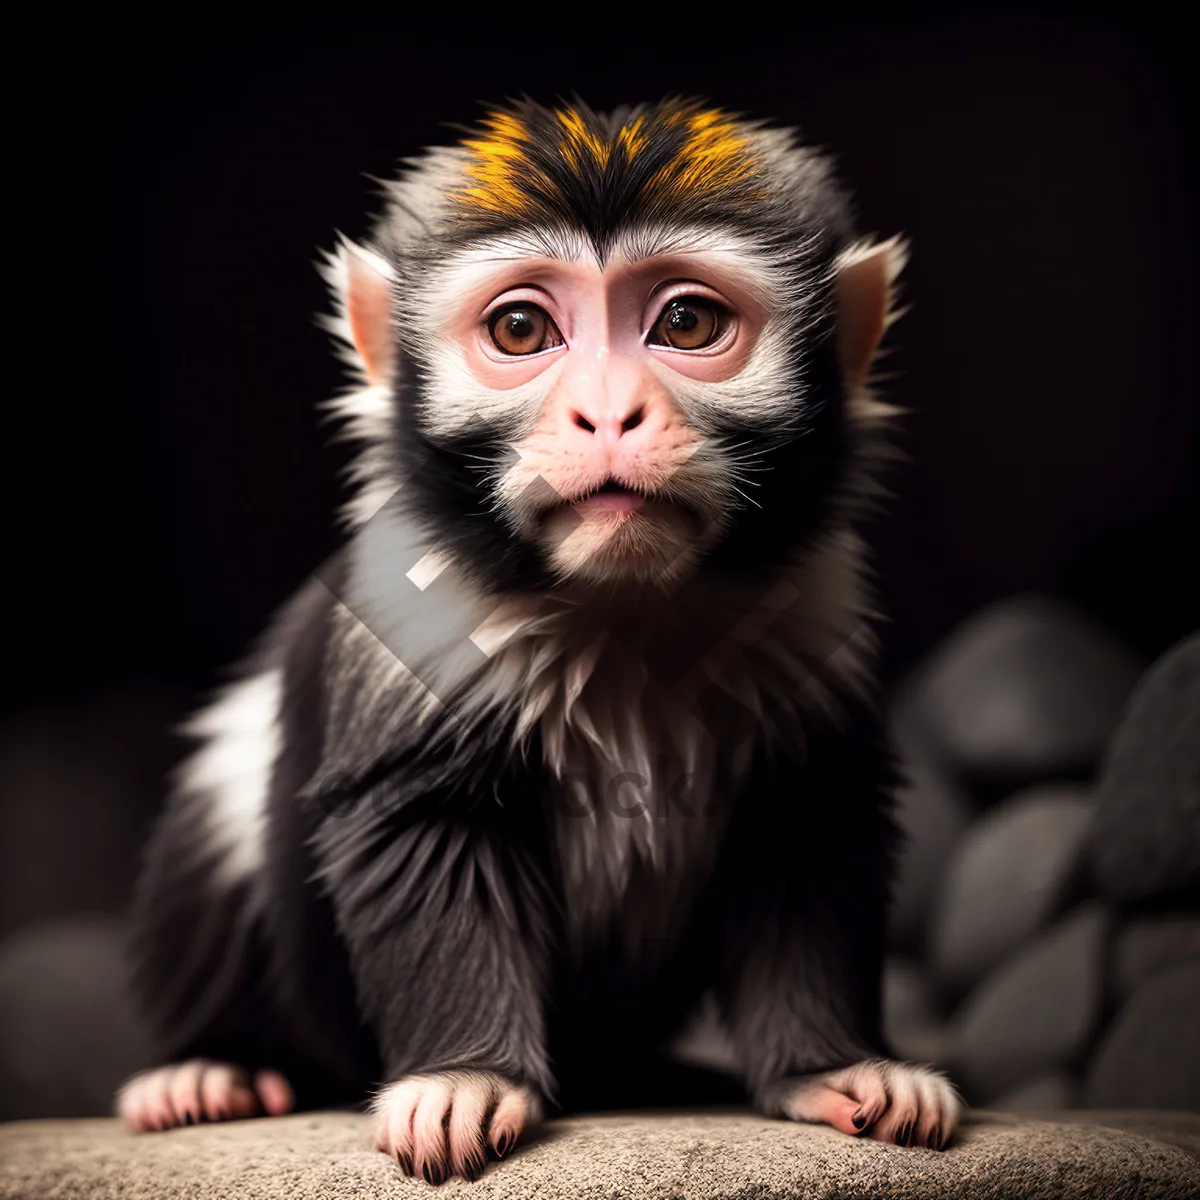 Picture of Cute Wild Monkey in Primate Jungle